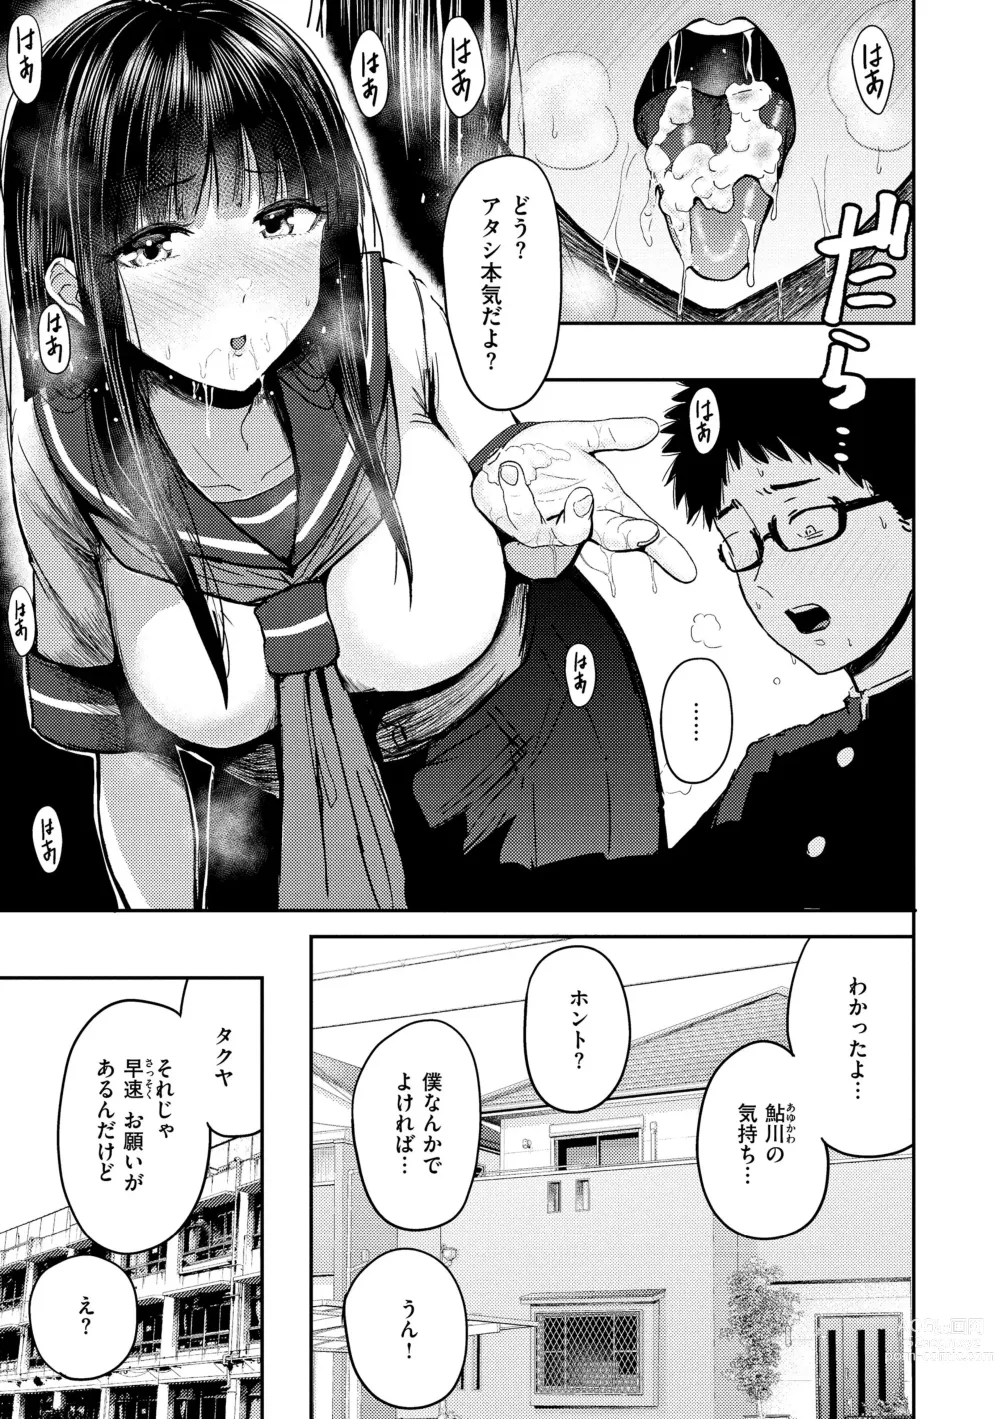 Page 19 of manga Shikoresugii! Shikorism more & more!!!!!!